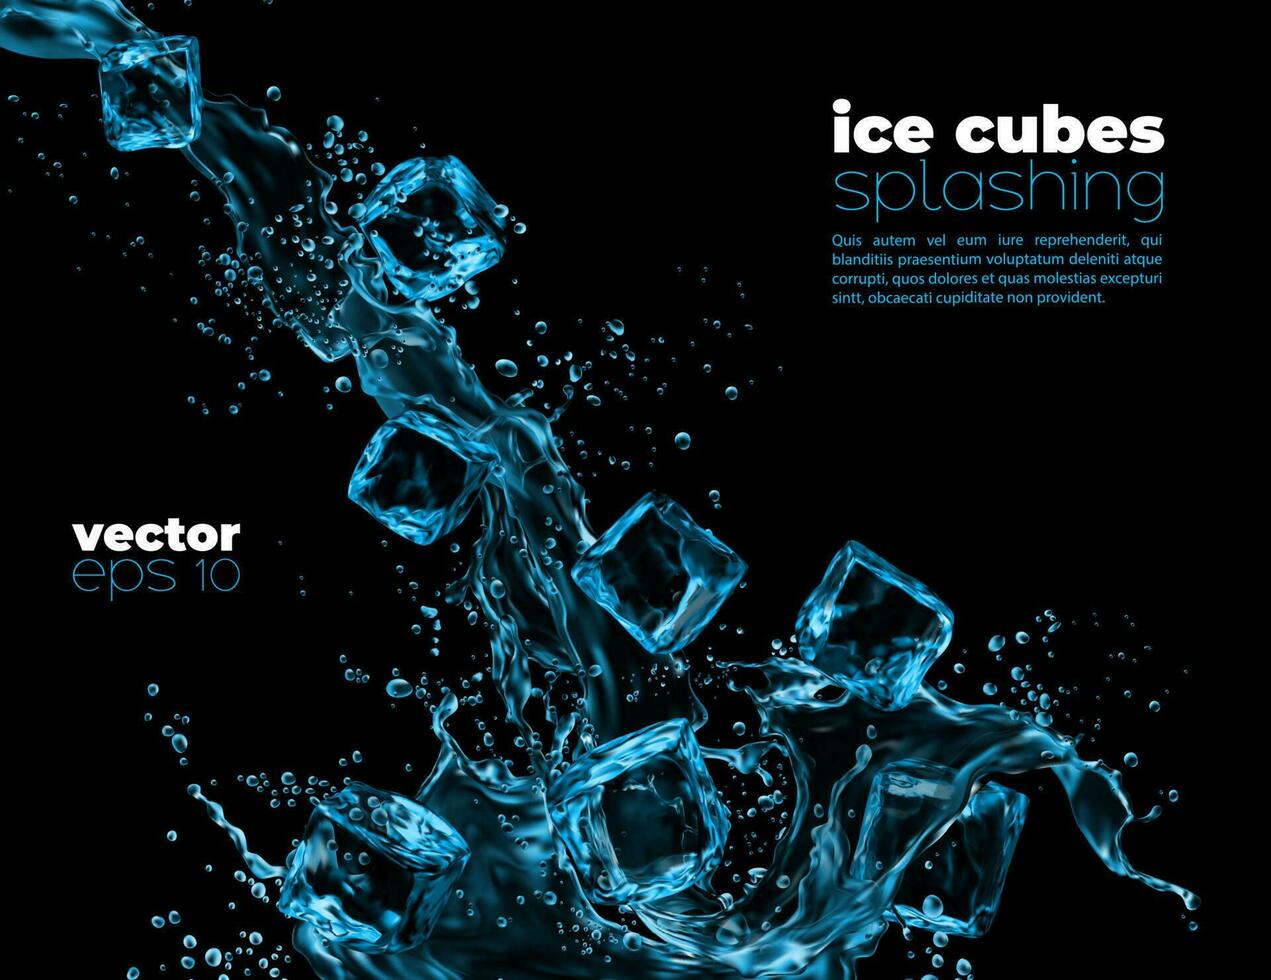 gelo cubos dentro azul transparente água onda respingo vetor